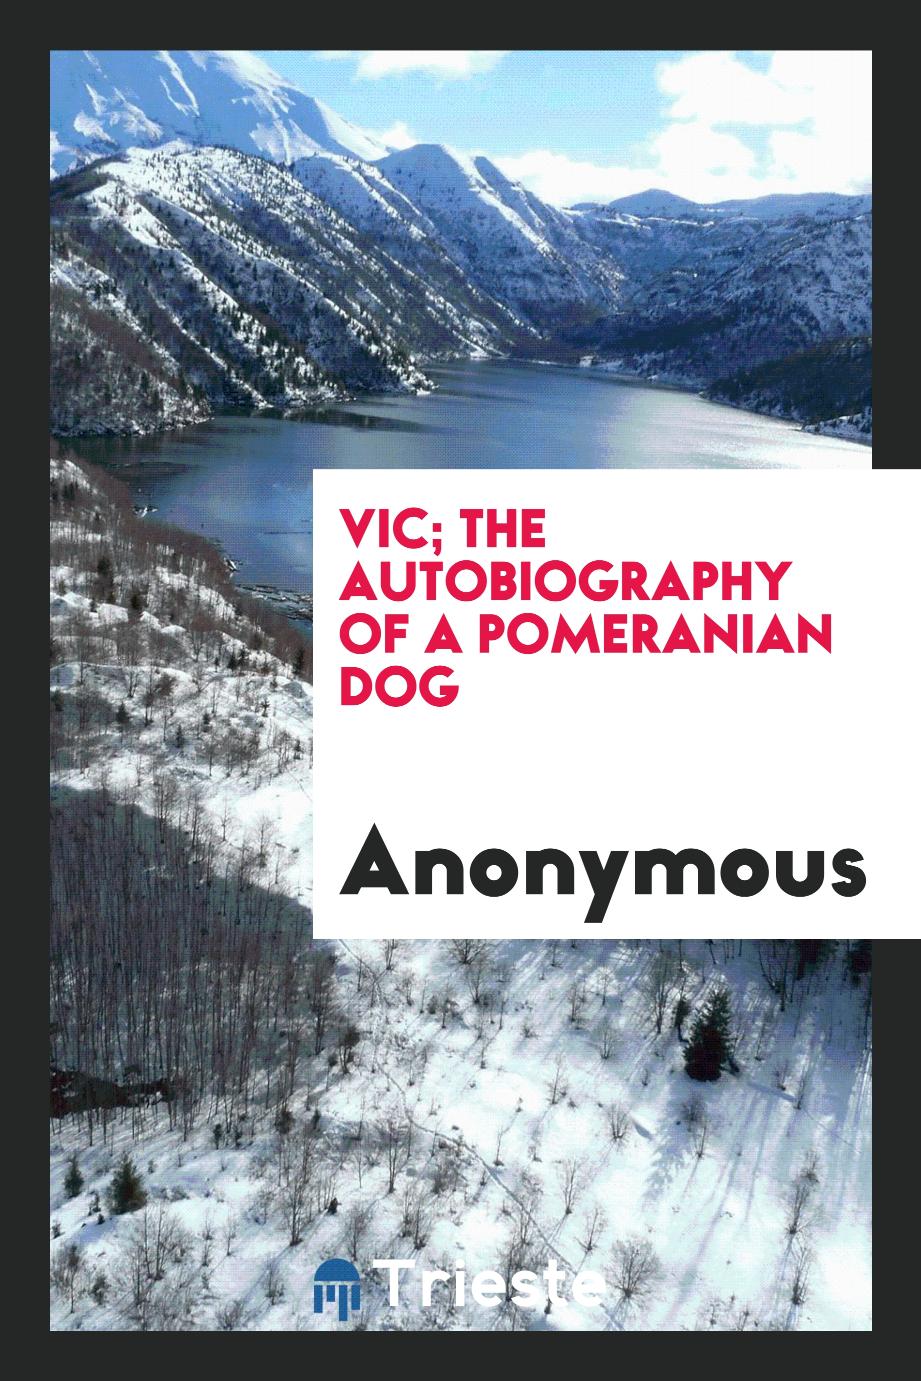 Vic; The Autobiography of a Pomeranian Dog